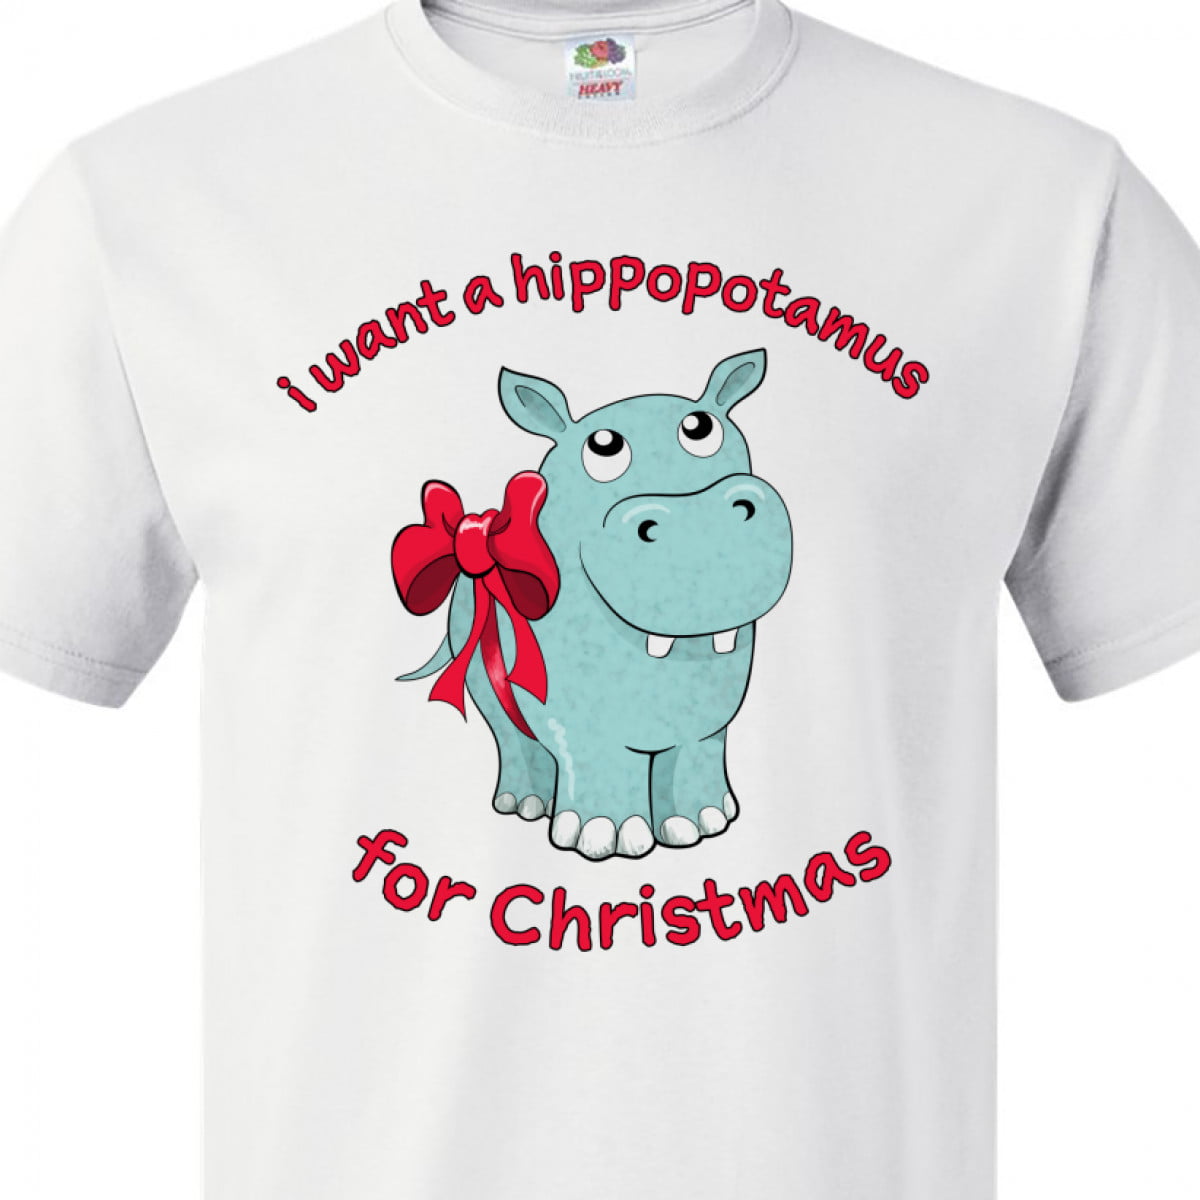 I Want A Hippopotamus For Christmas Xmas Lights Santa Hippo Shirt